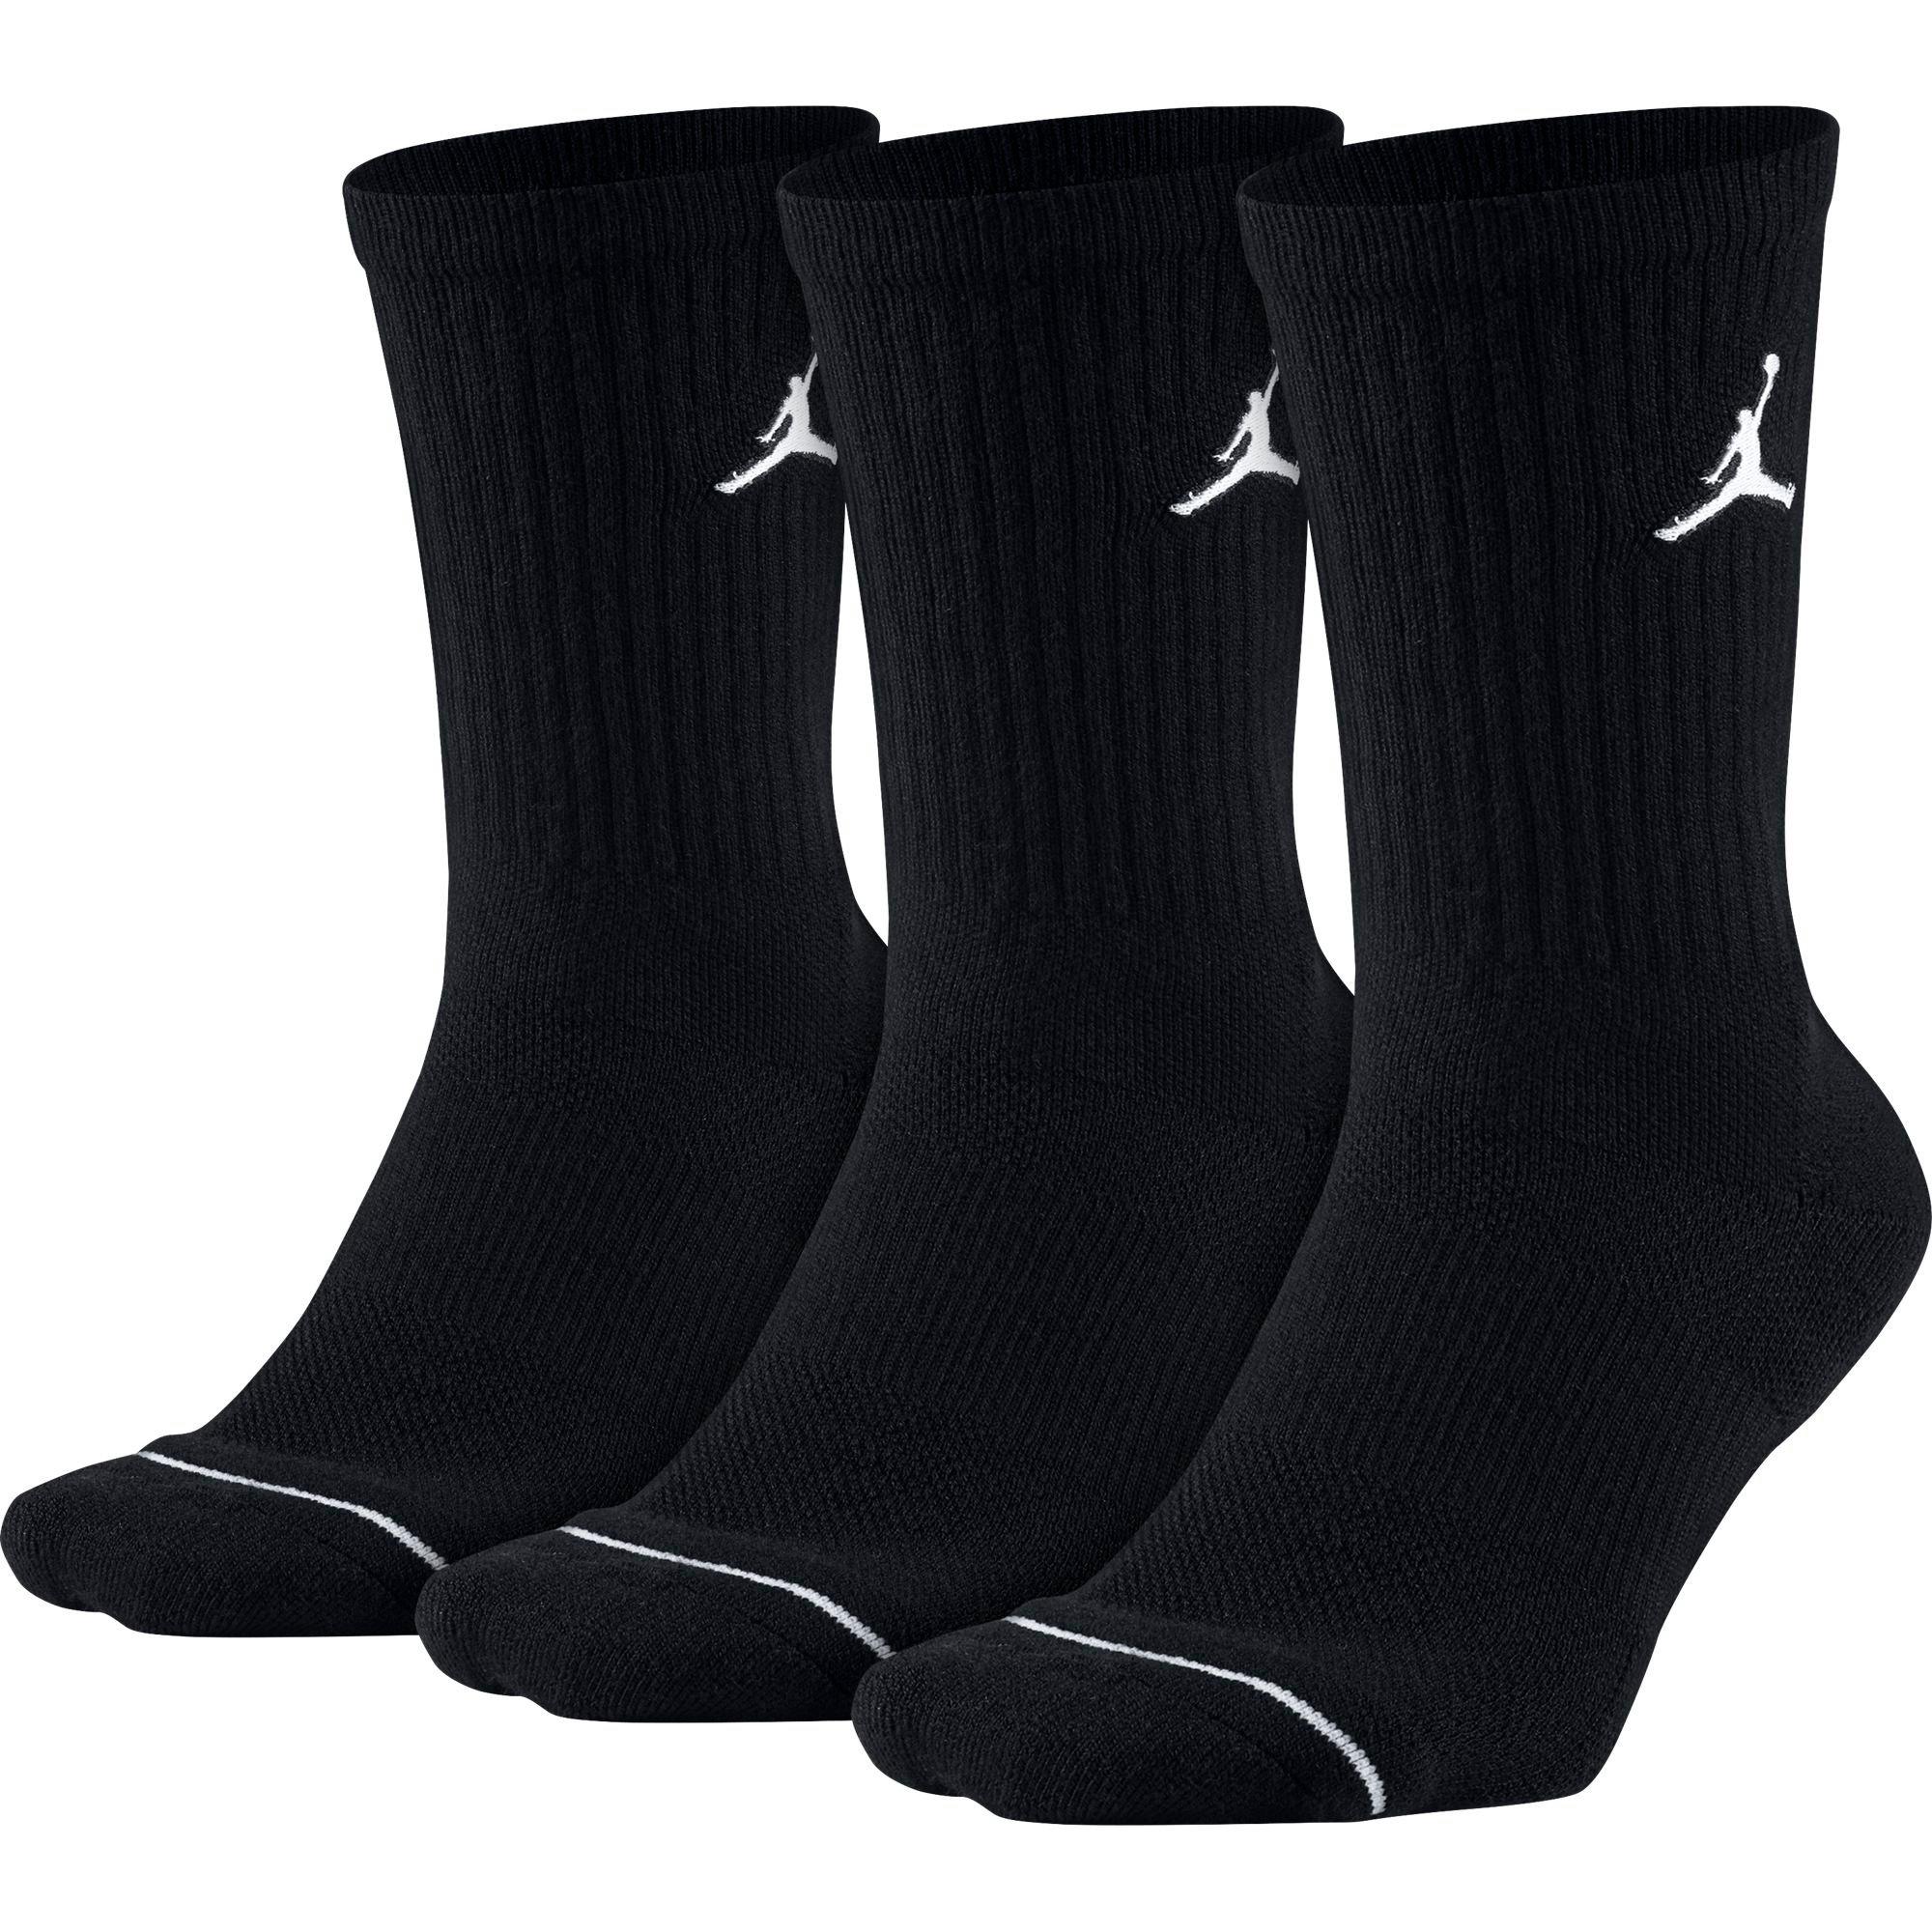 Jordan Jumpman Crew 3 Pack Socks